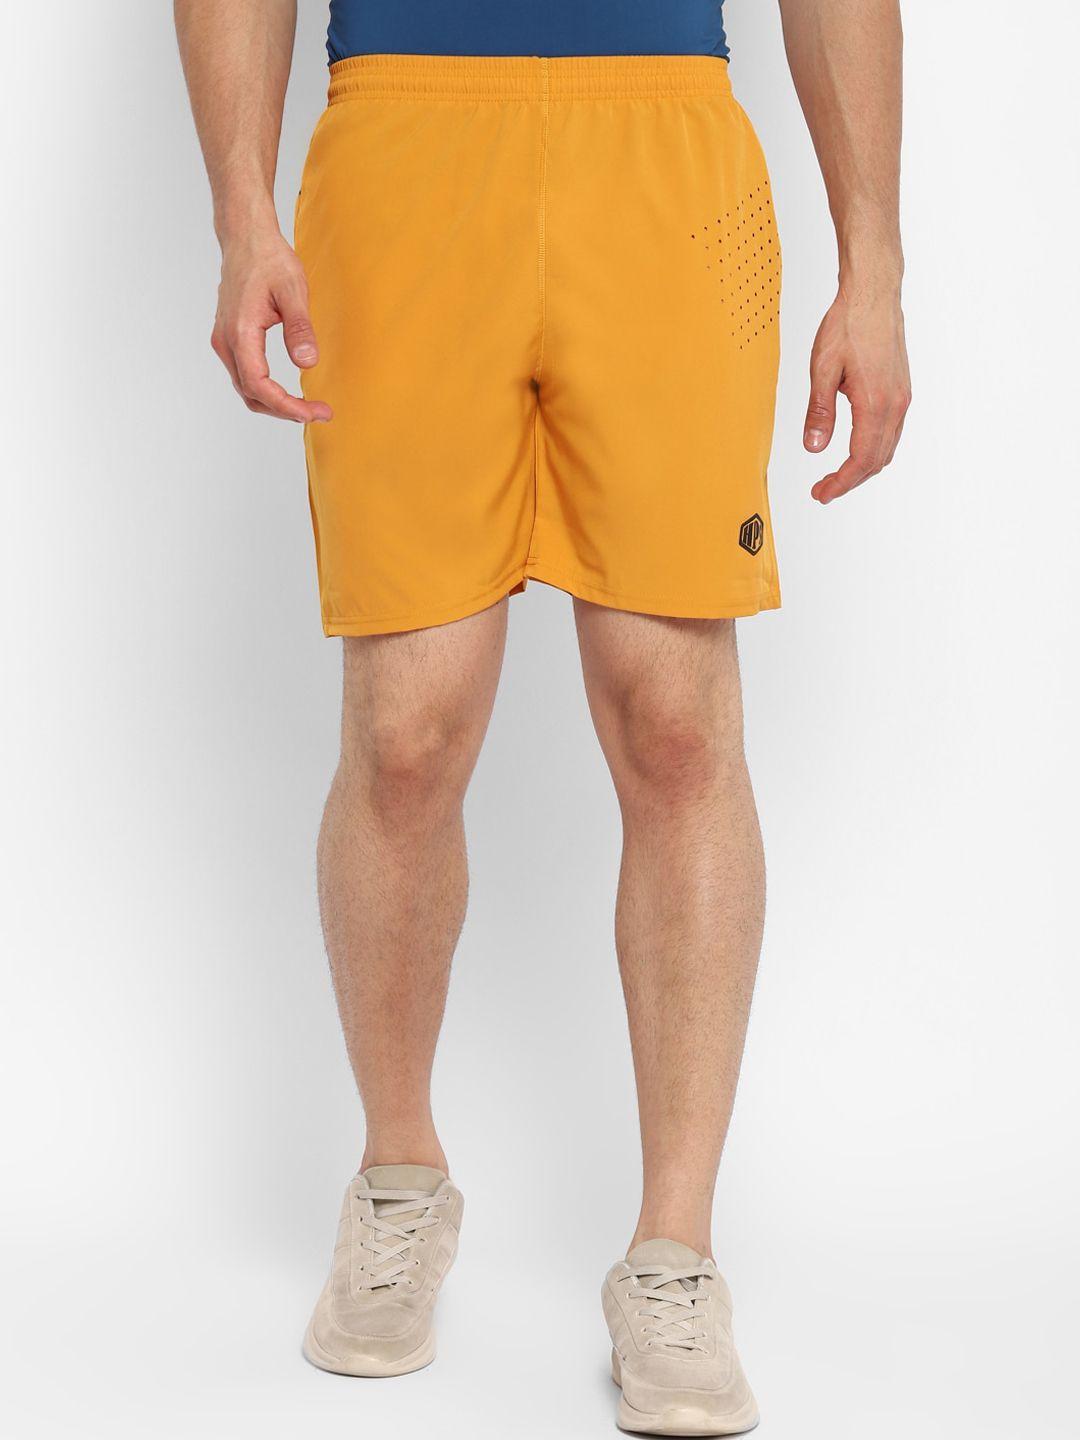 hps sports men yellow running sports shorts